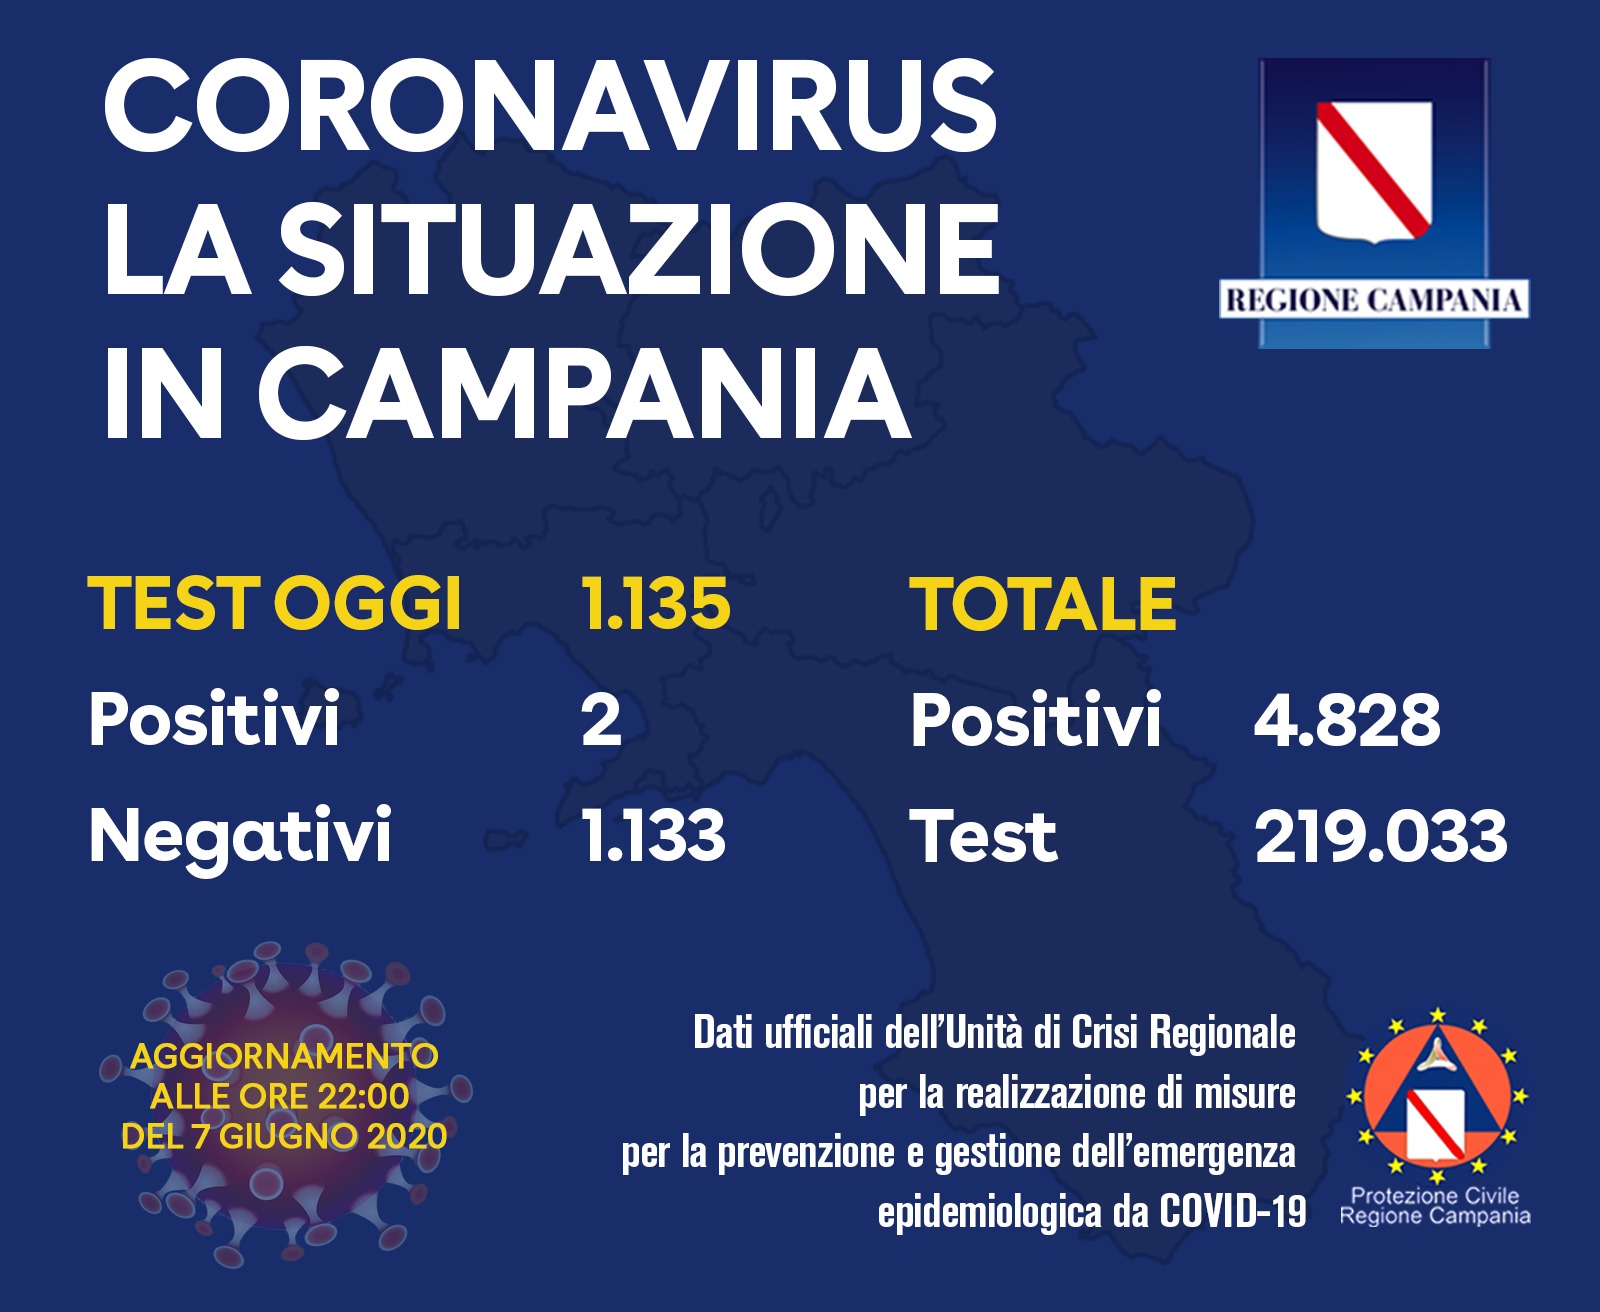 Coronavirus, oggi 2 positivi in Campania